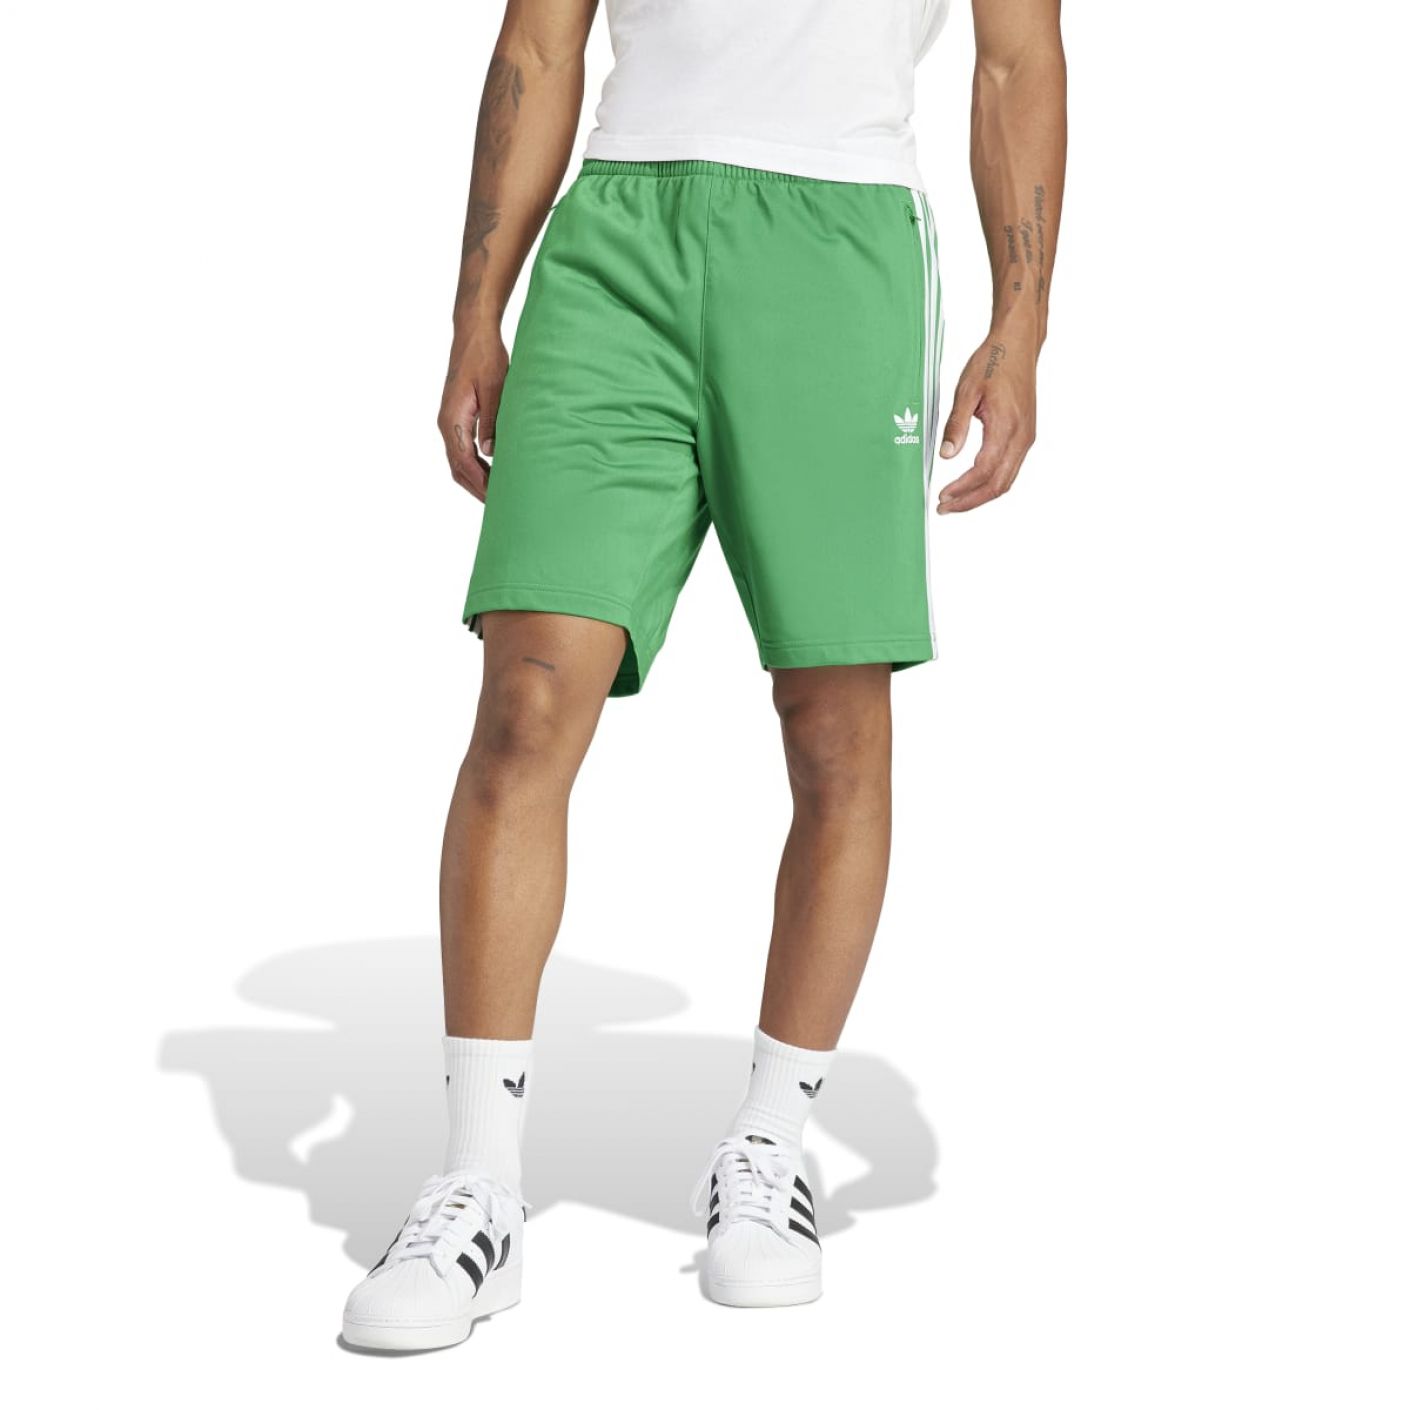 Adidas Short Firebird Verde/Bianco da Uomo